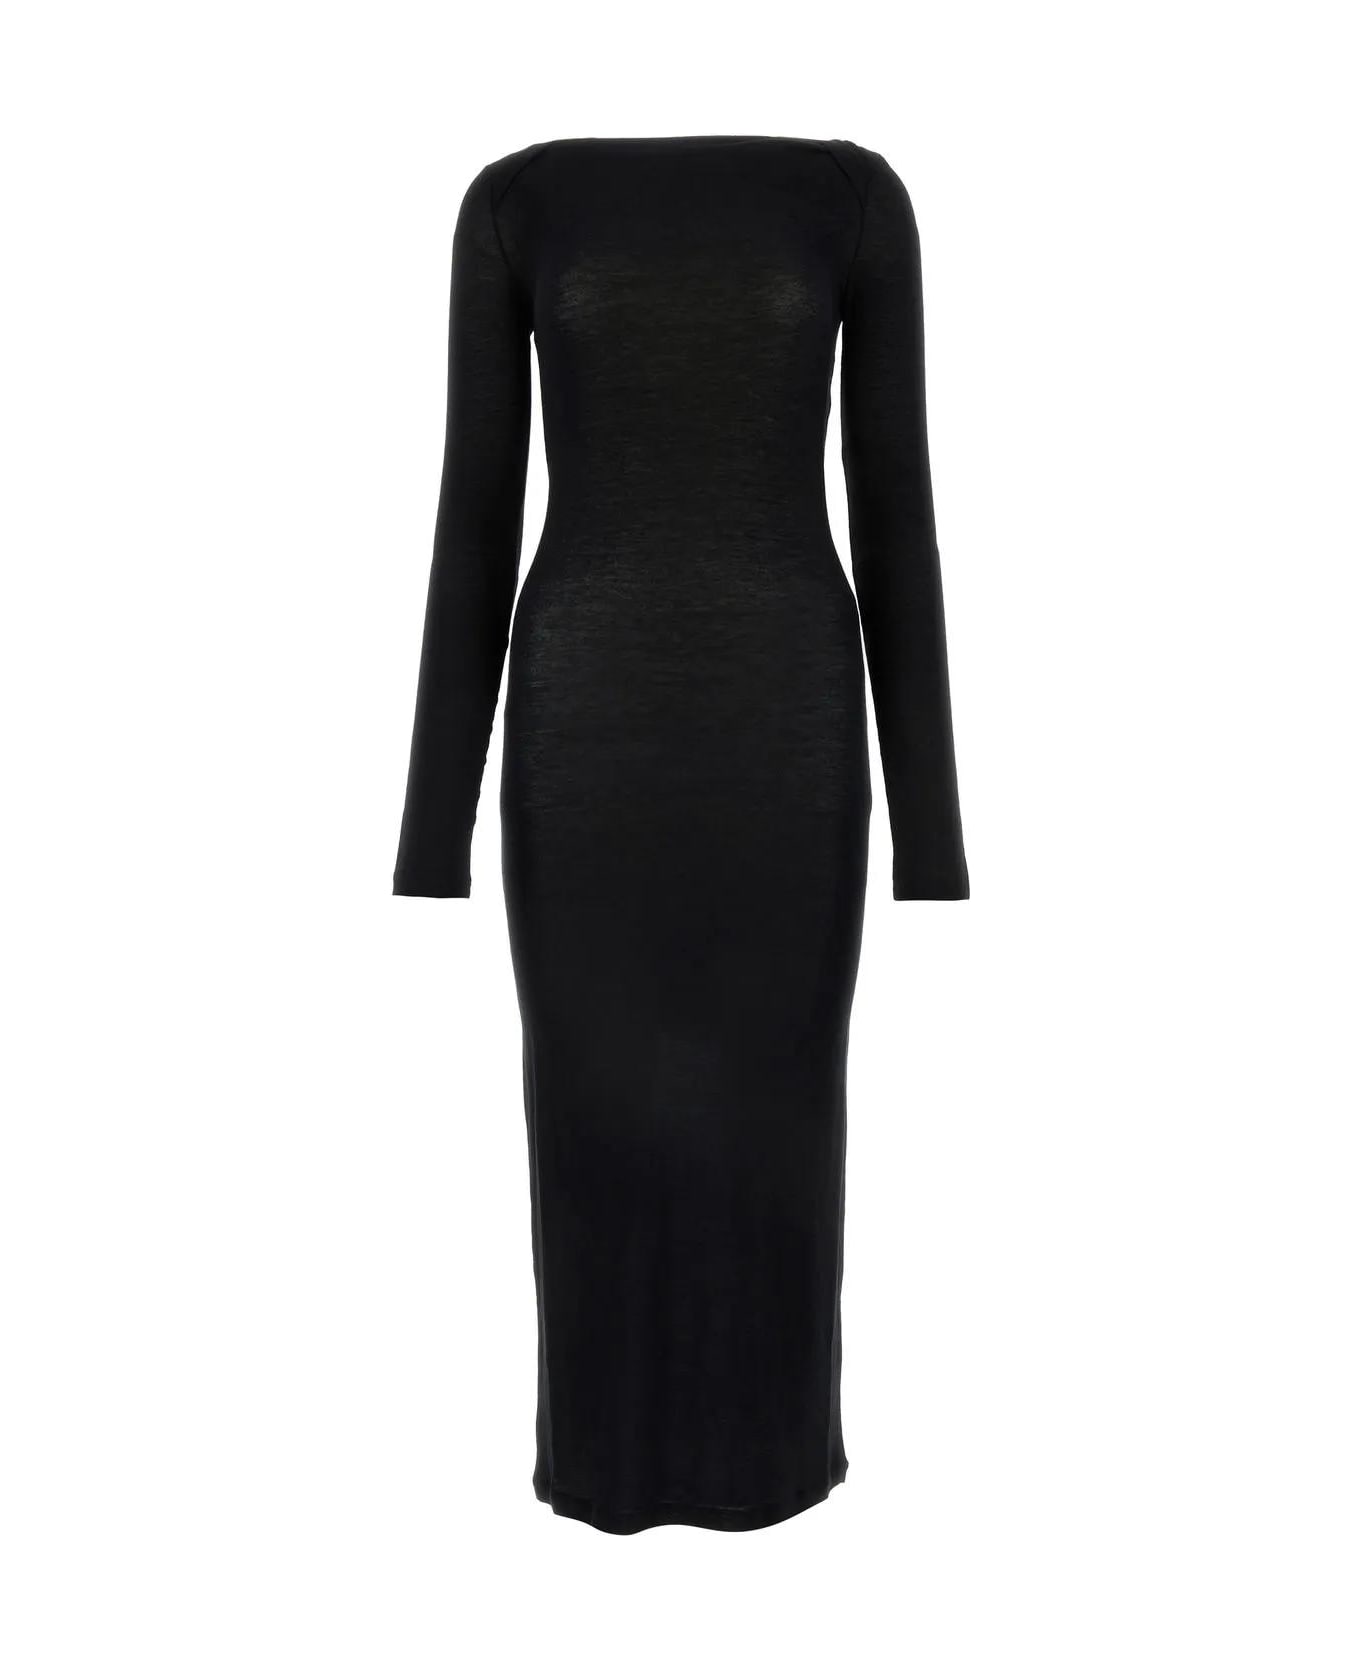 Saint Laurent Black Viscose Blend Dress - Black